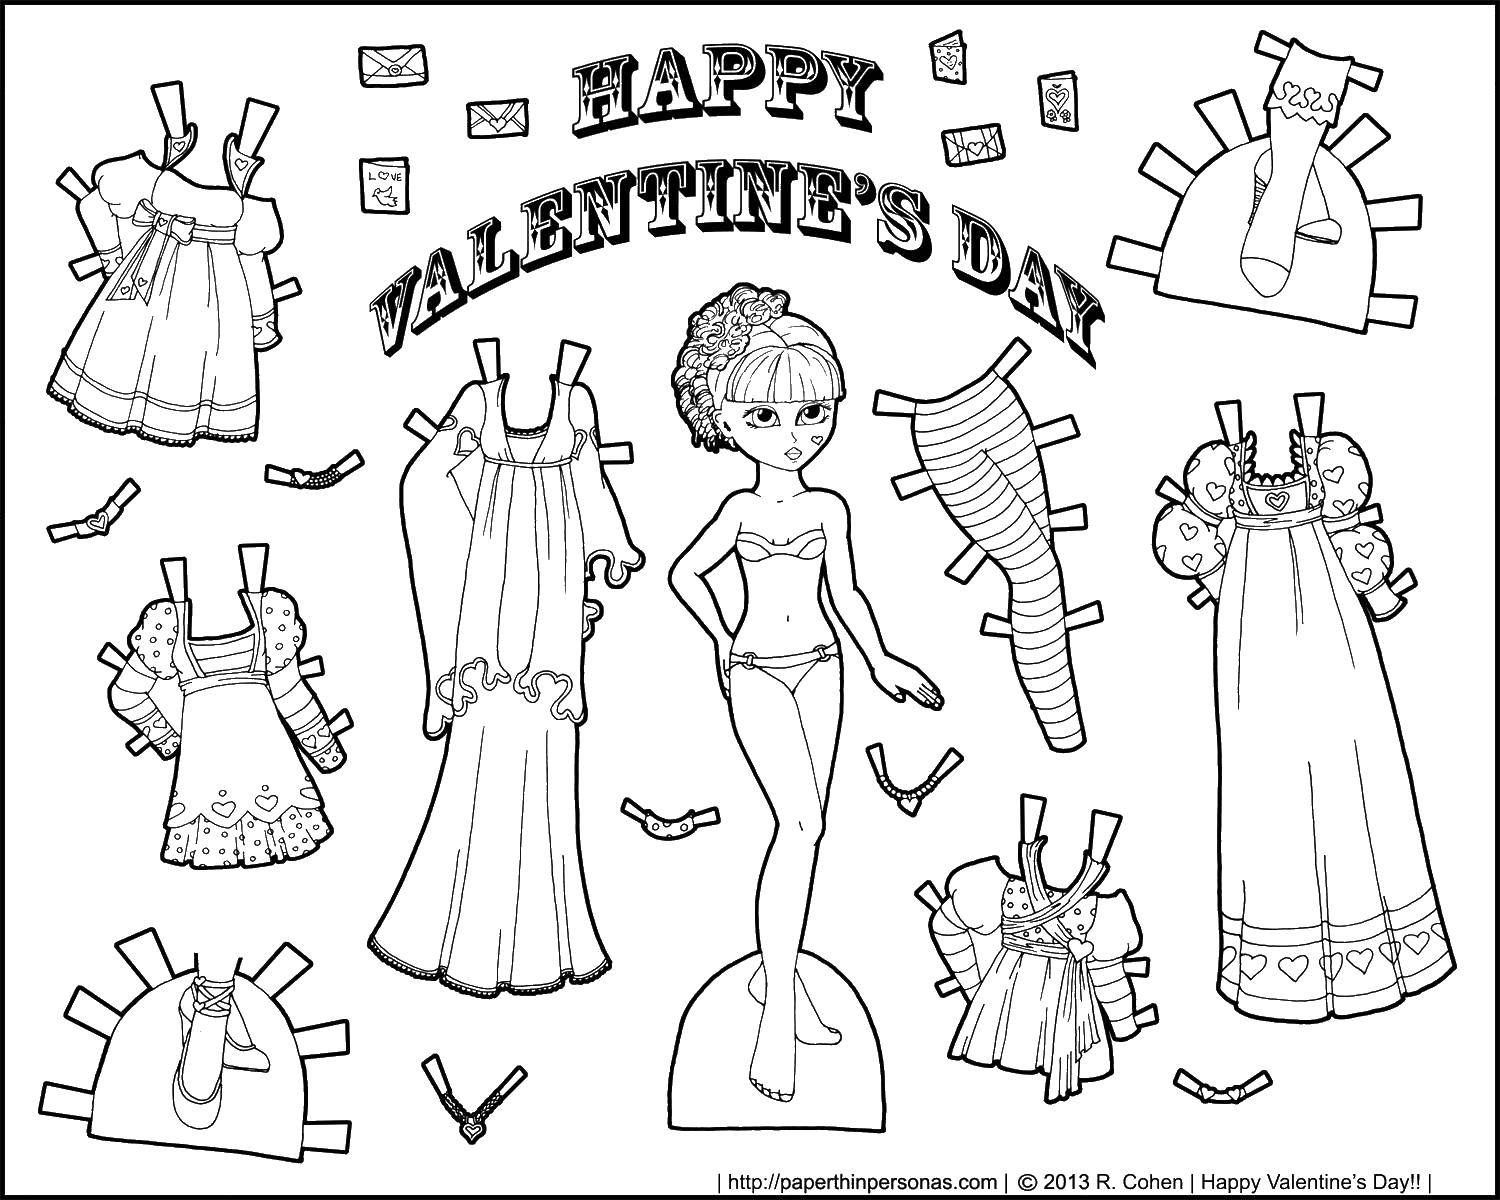 Coloring Кукла и одежда. Category Куклы. Tags:  кукла, одежда, день валентина.